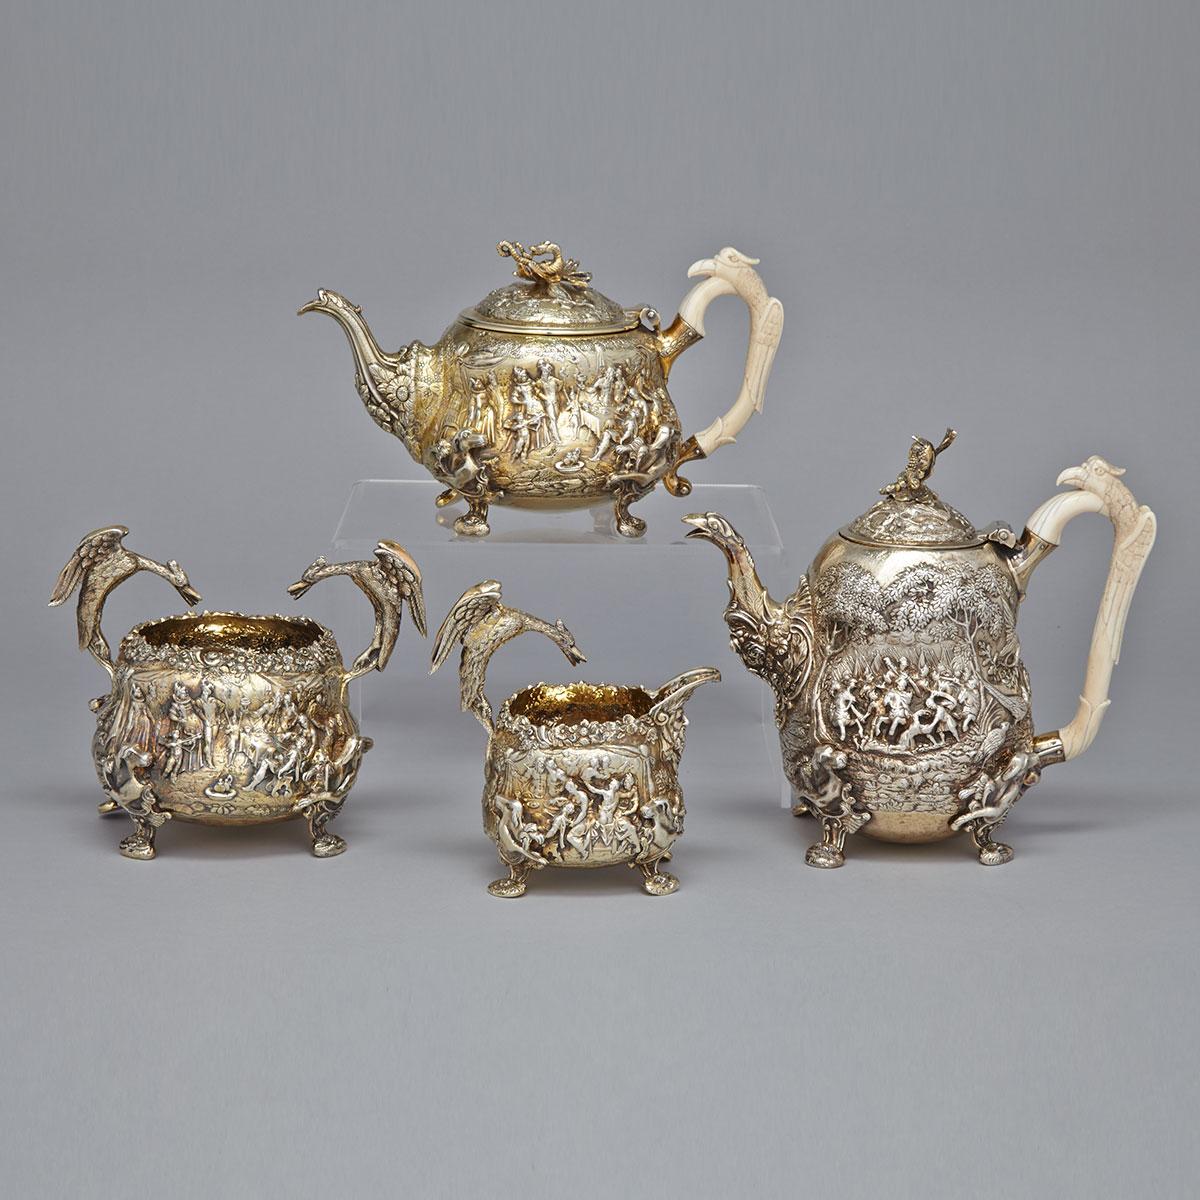 George III Silver-Gilt Tea and Coffee Service, Edward Farrell, London, 1816